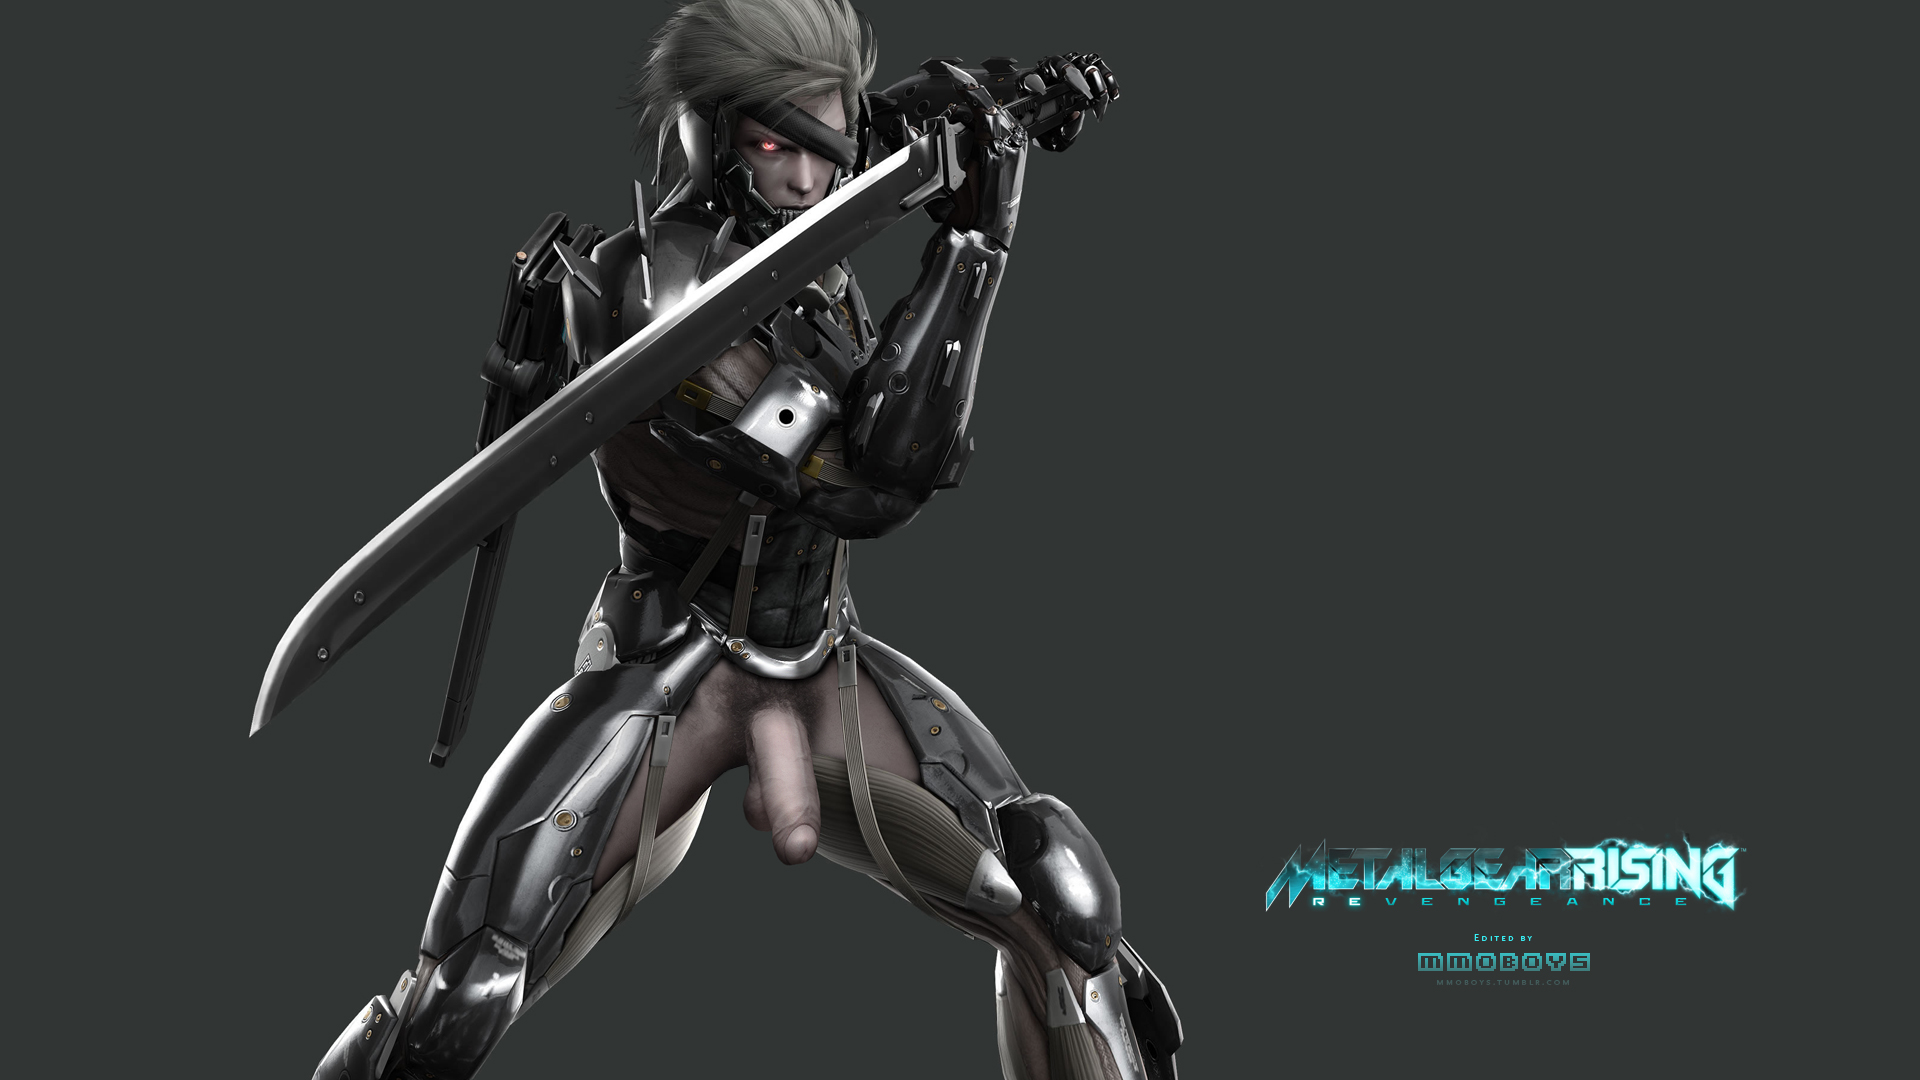 1373759 - Metal_Gear_Rising Revengeance Metal_Gear_Solid Raiden mmoboys.jpg...